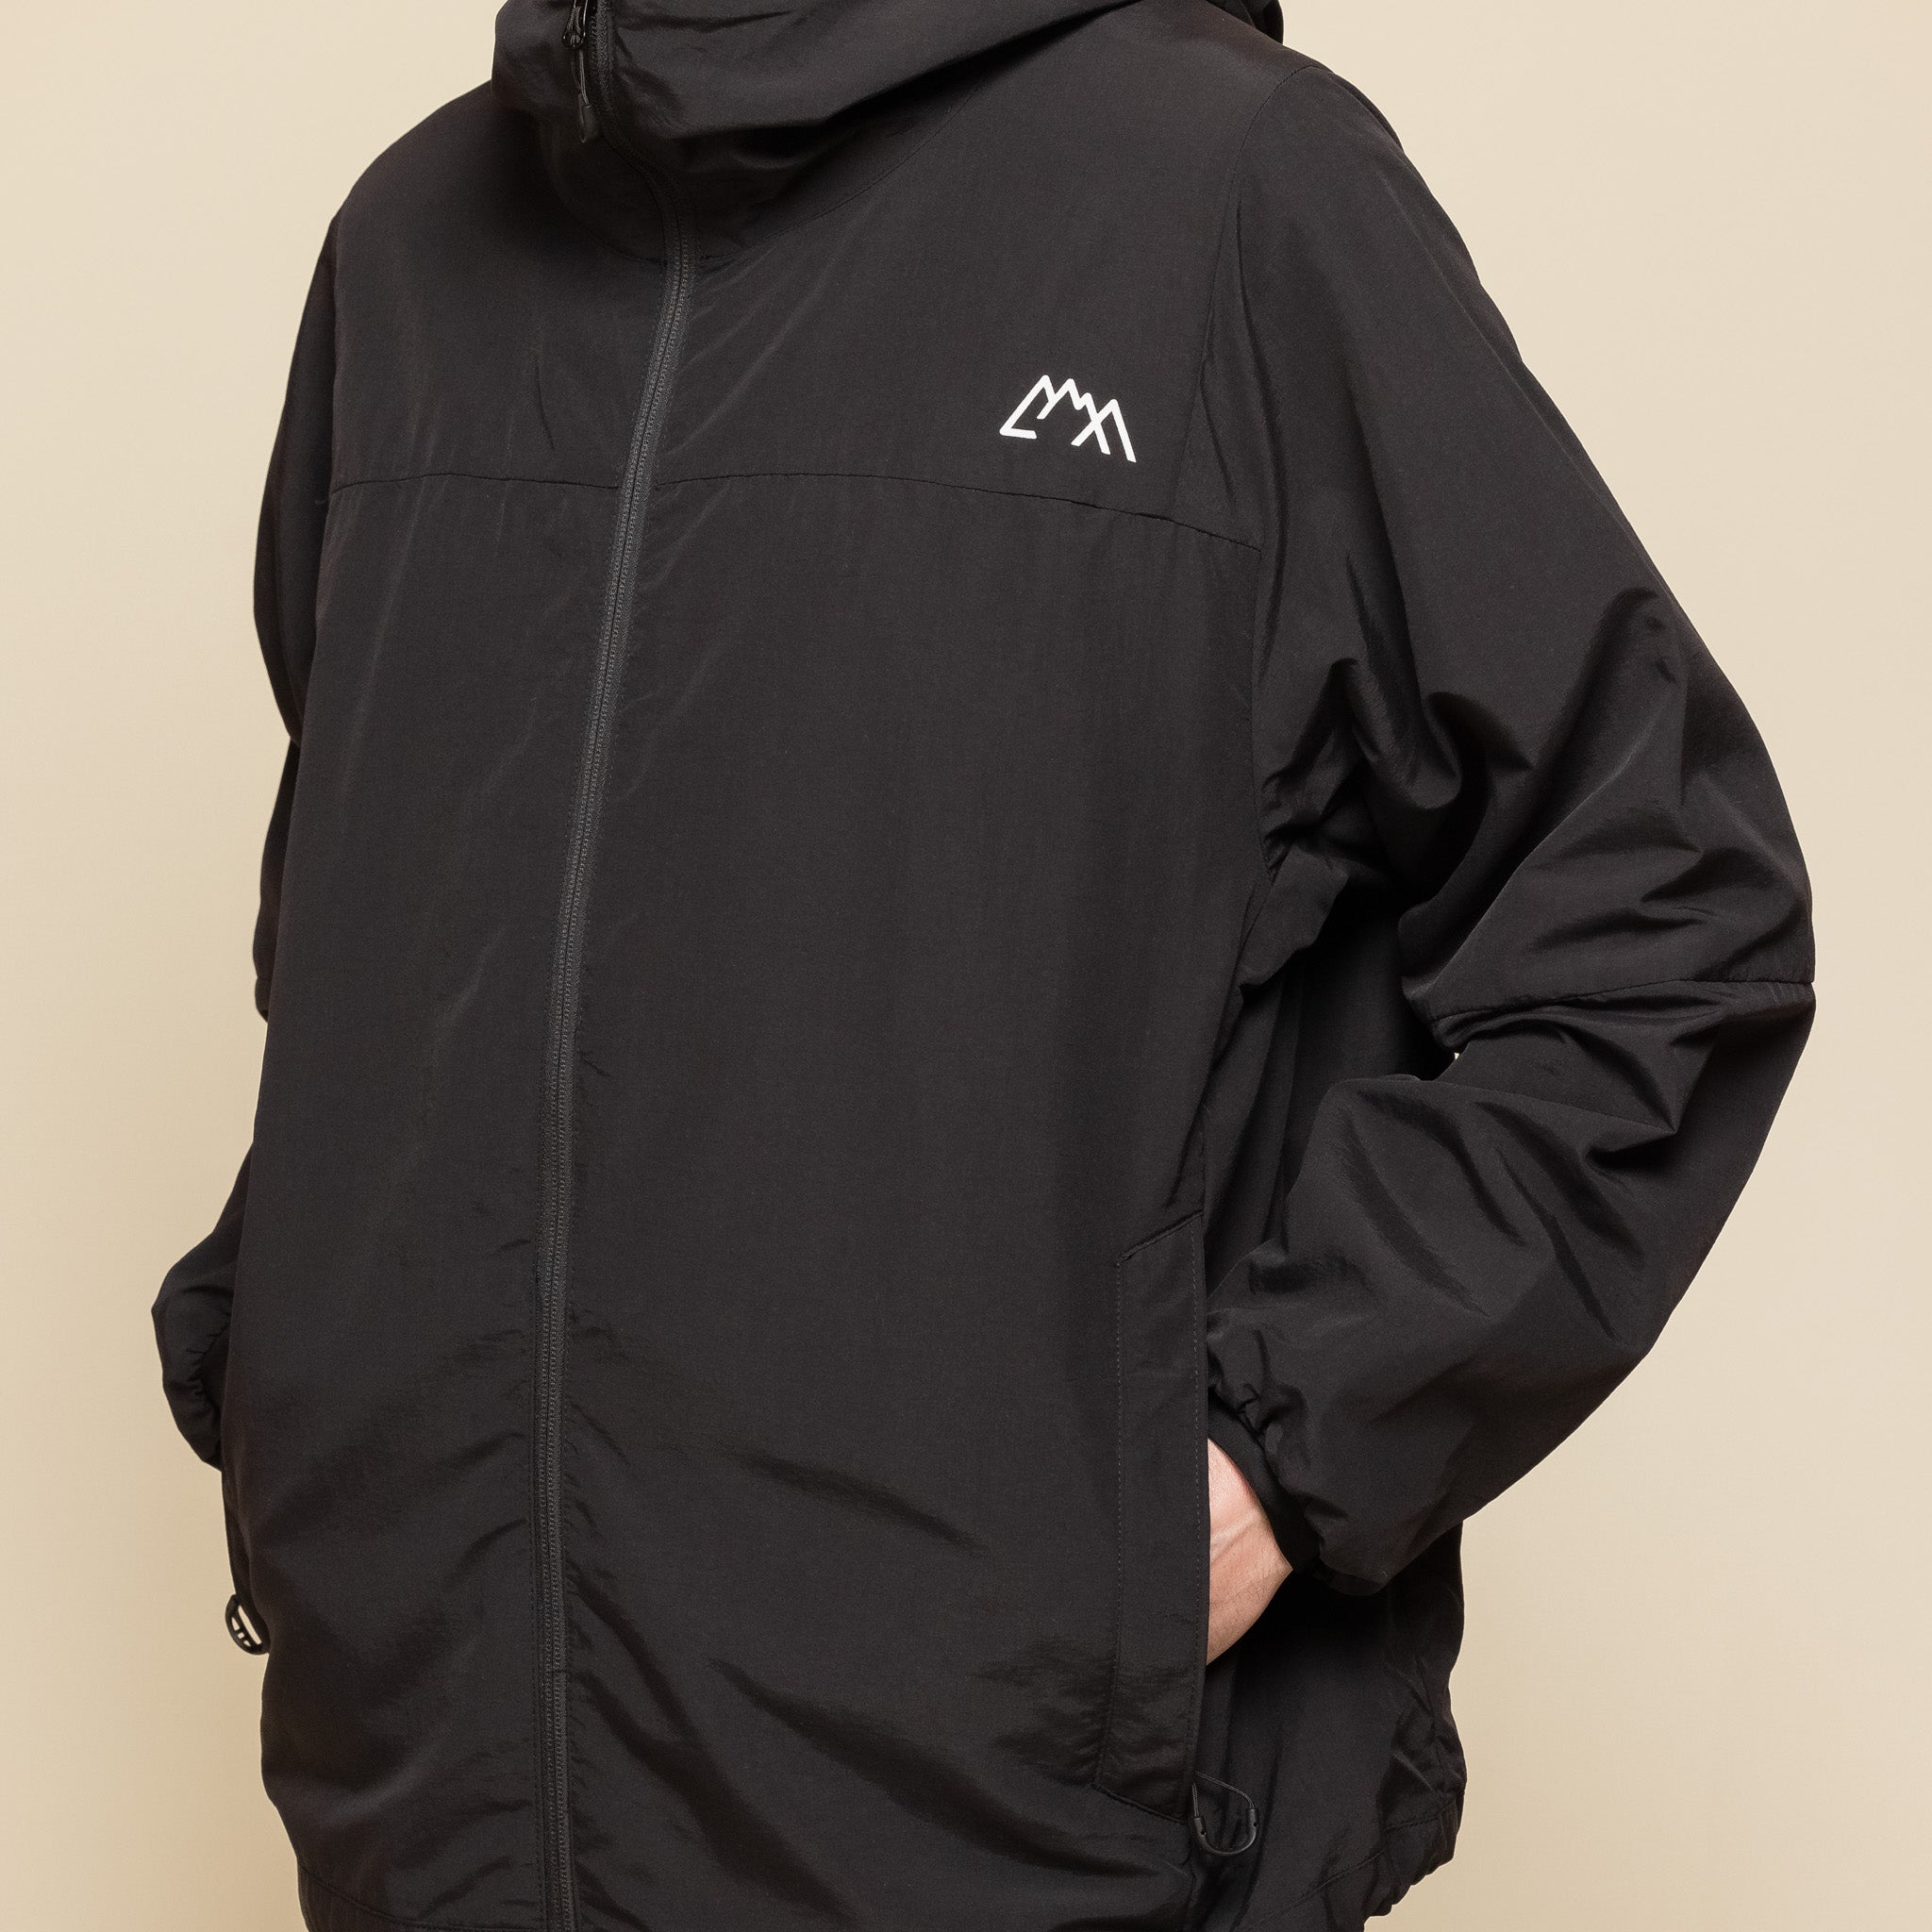 CMF Comfy Outdoor Garment - Shell Shirt - Black